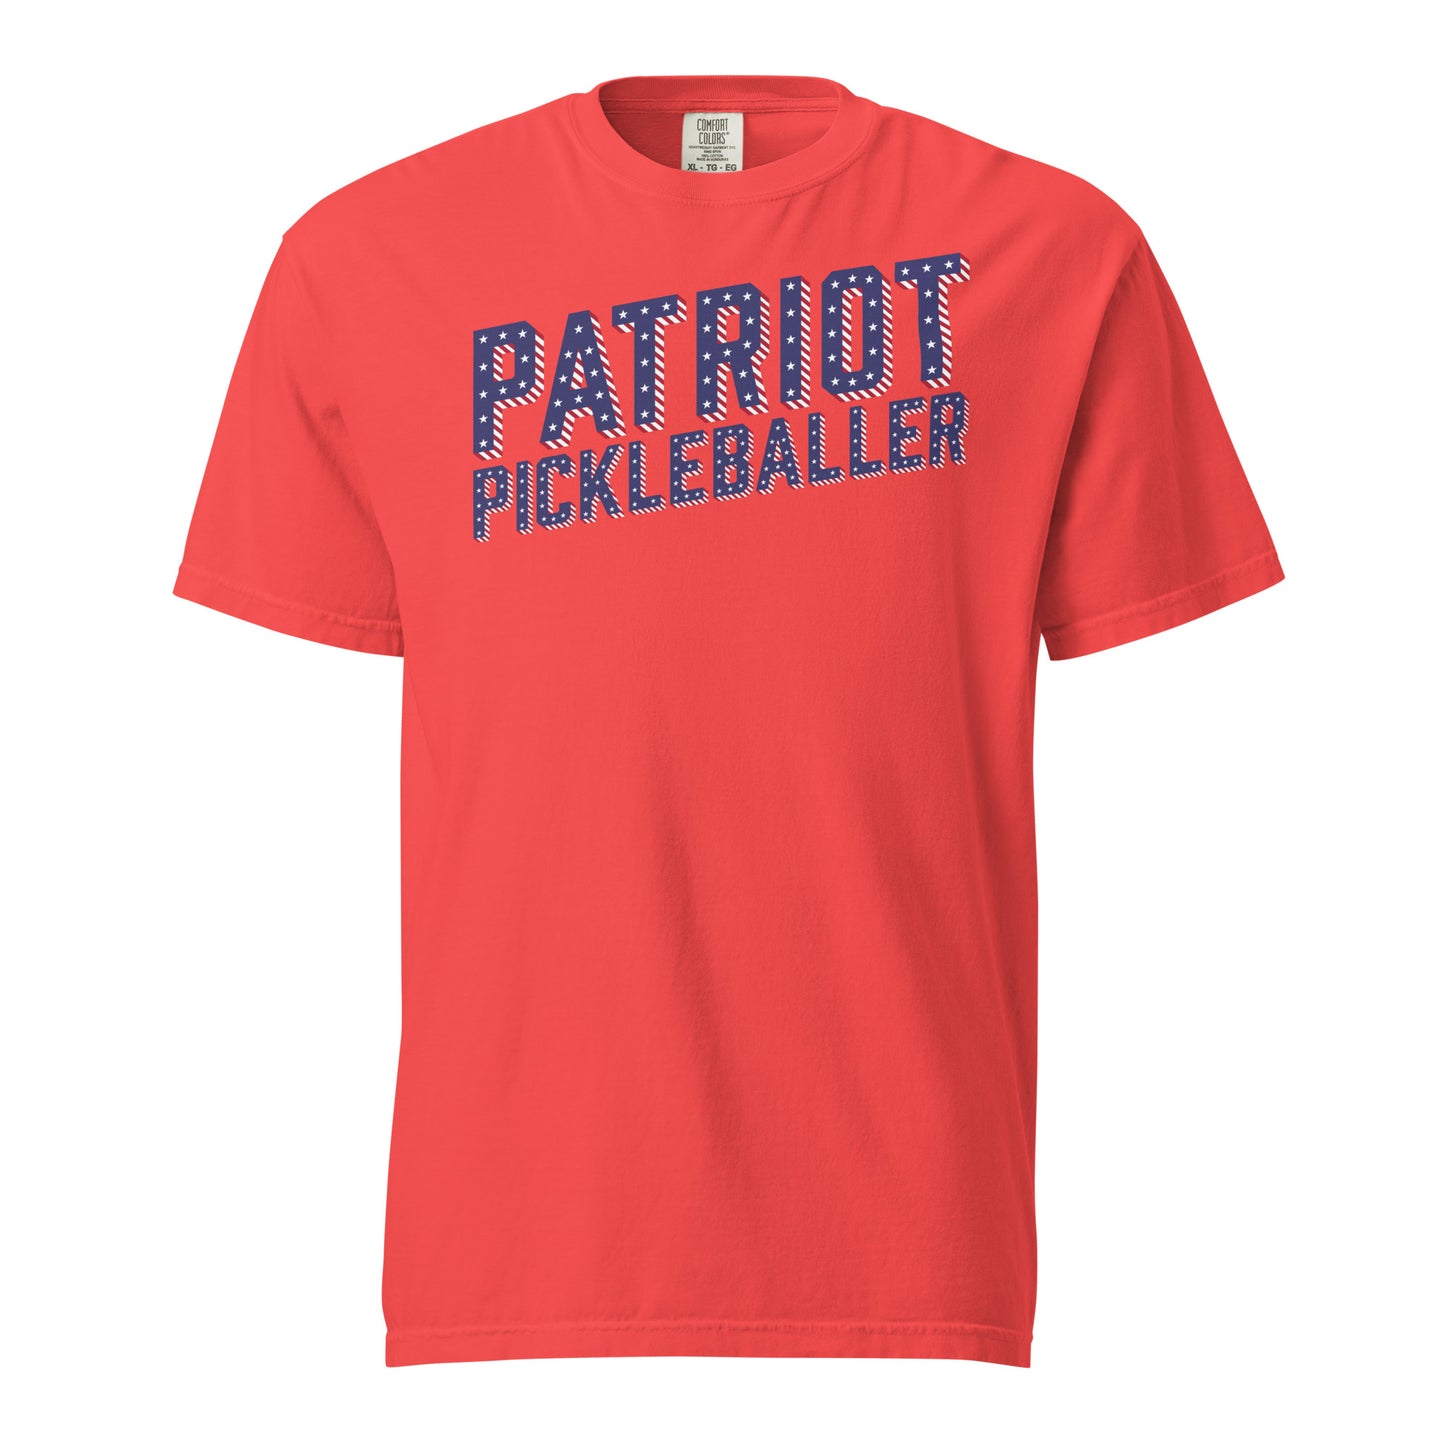 Patriot Pickleballer Unisex garment-dyed heavyweight t-shirt